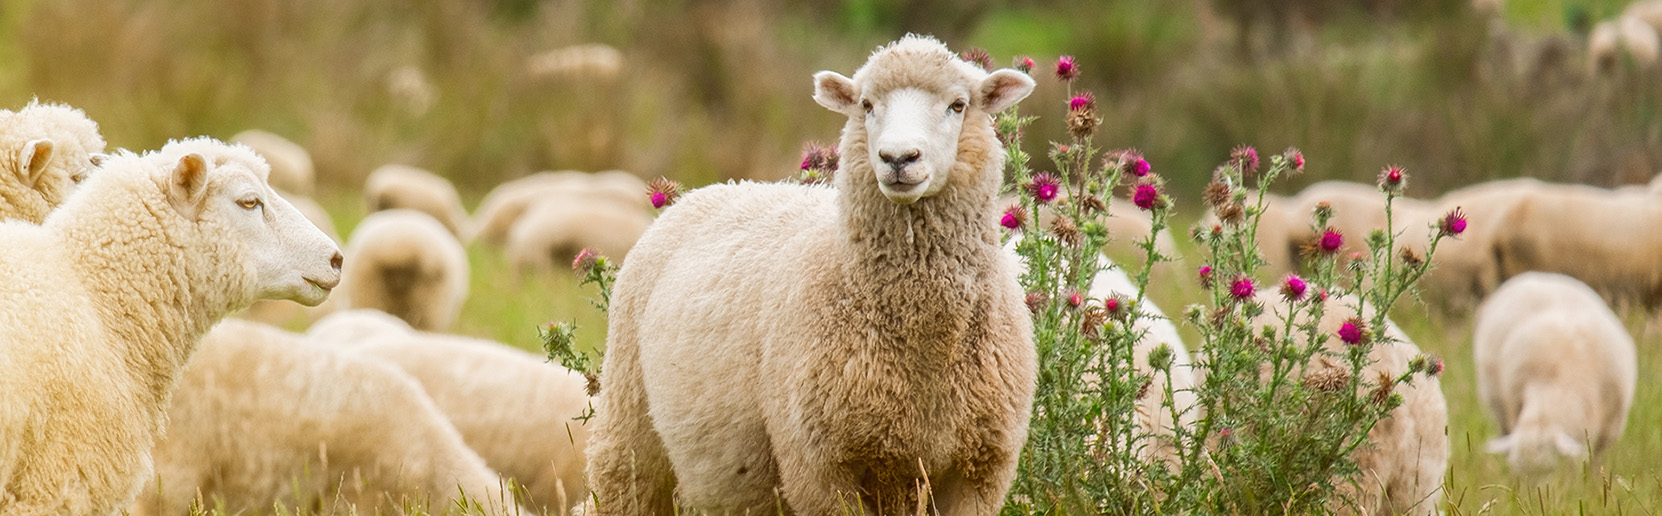 Sheep in Pasture - Zoetis